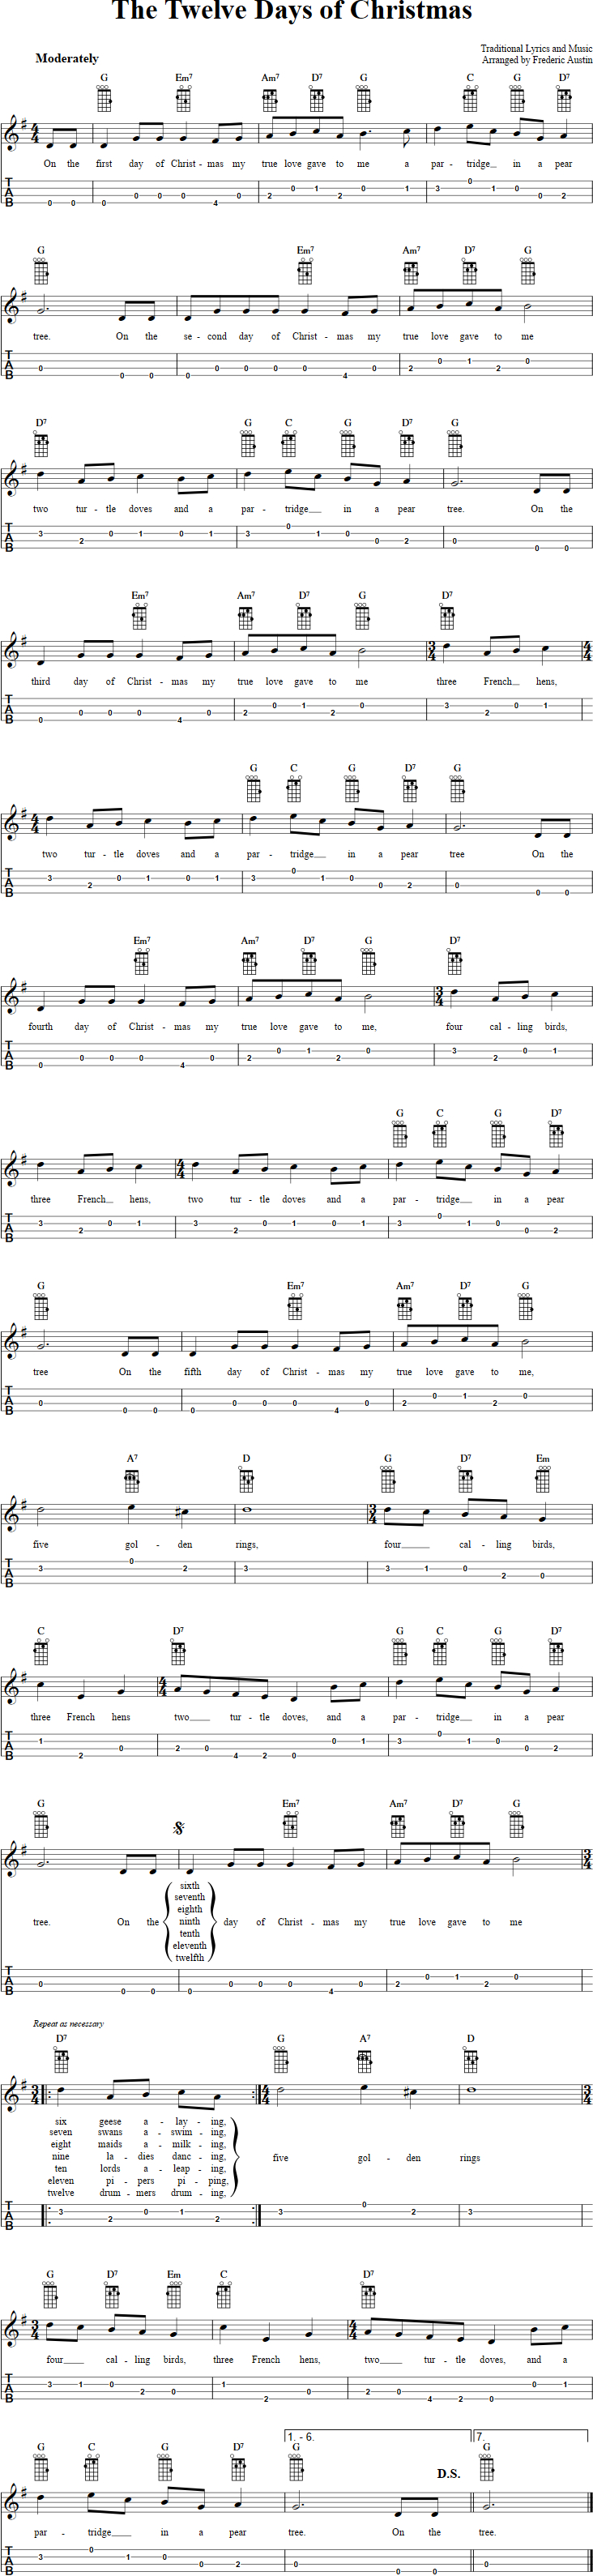 Baritone Ukulele Chords The Twelve Days Of Christmas Chords Sheet Music And Tab For